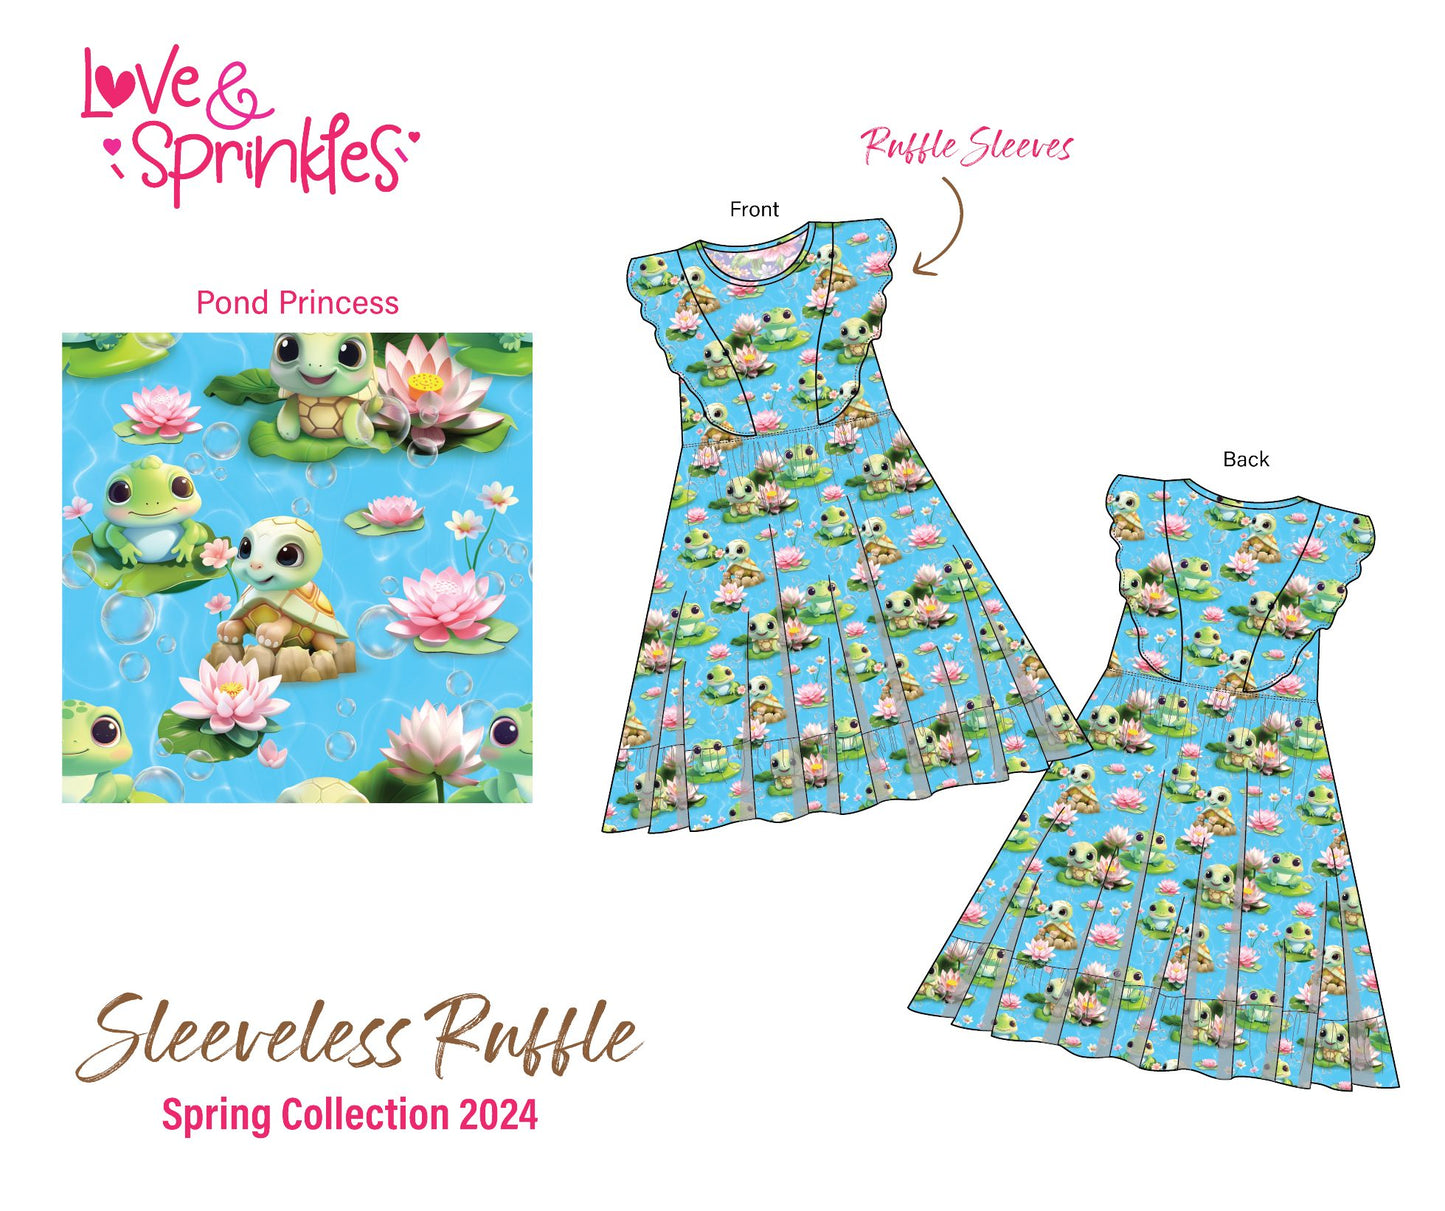 Love & Sprinkles Pond Princess Sleeveless Ruffle